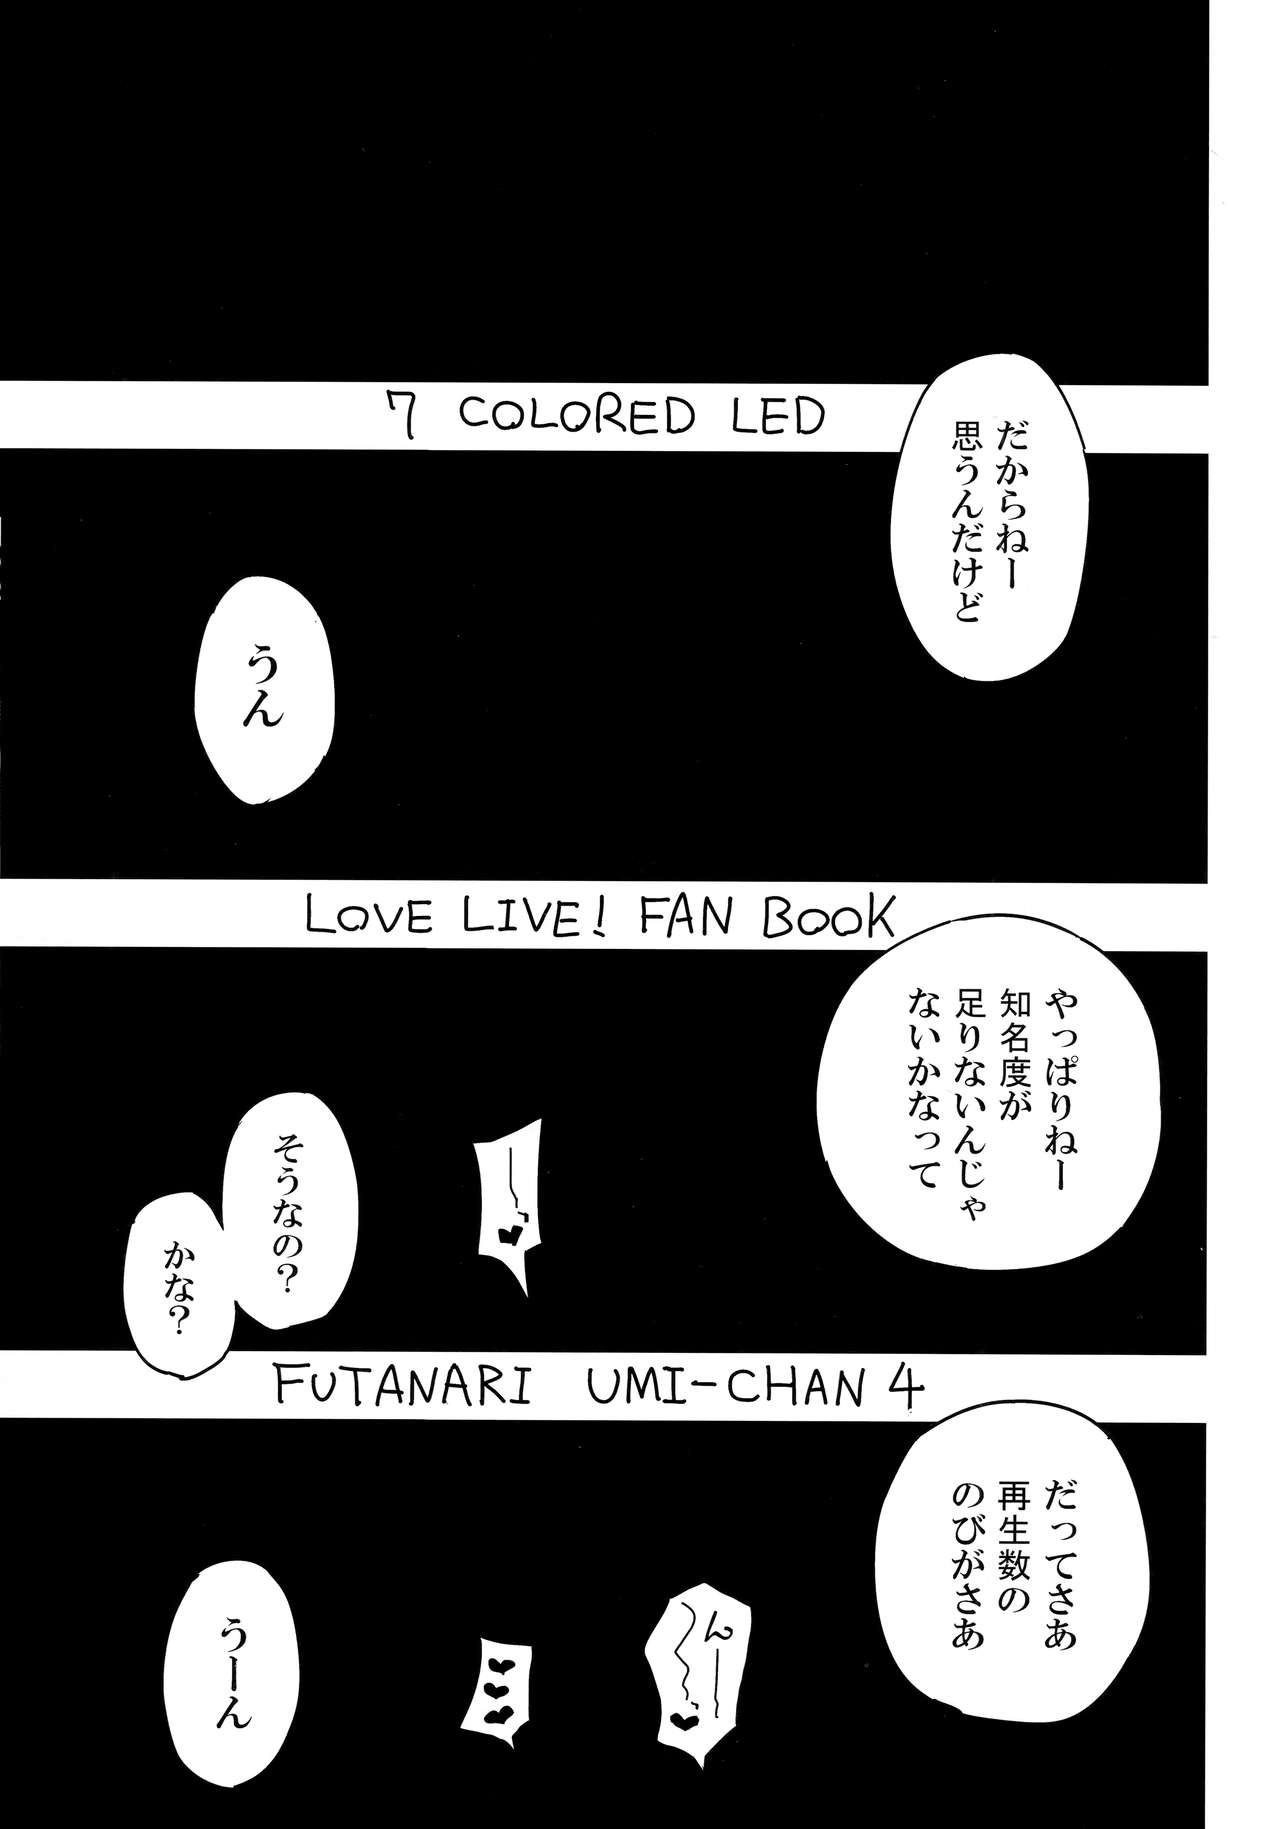 Cruising Futanari Umi-chan 4 - Love live Fellatio - Page 2